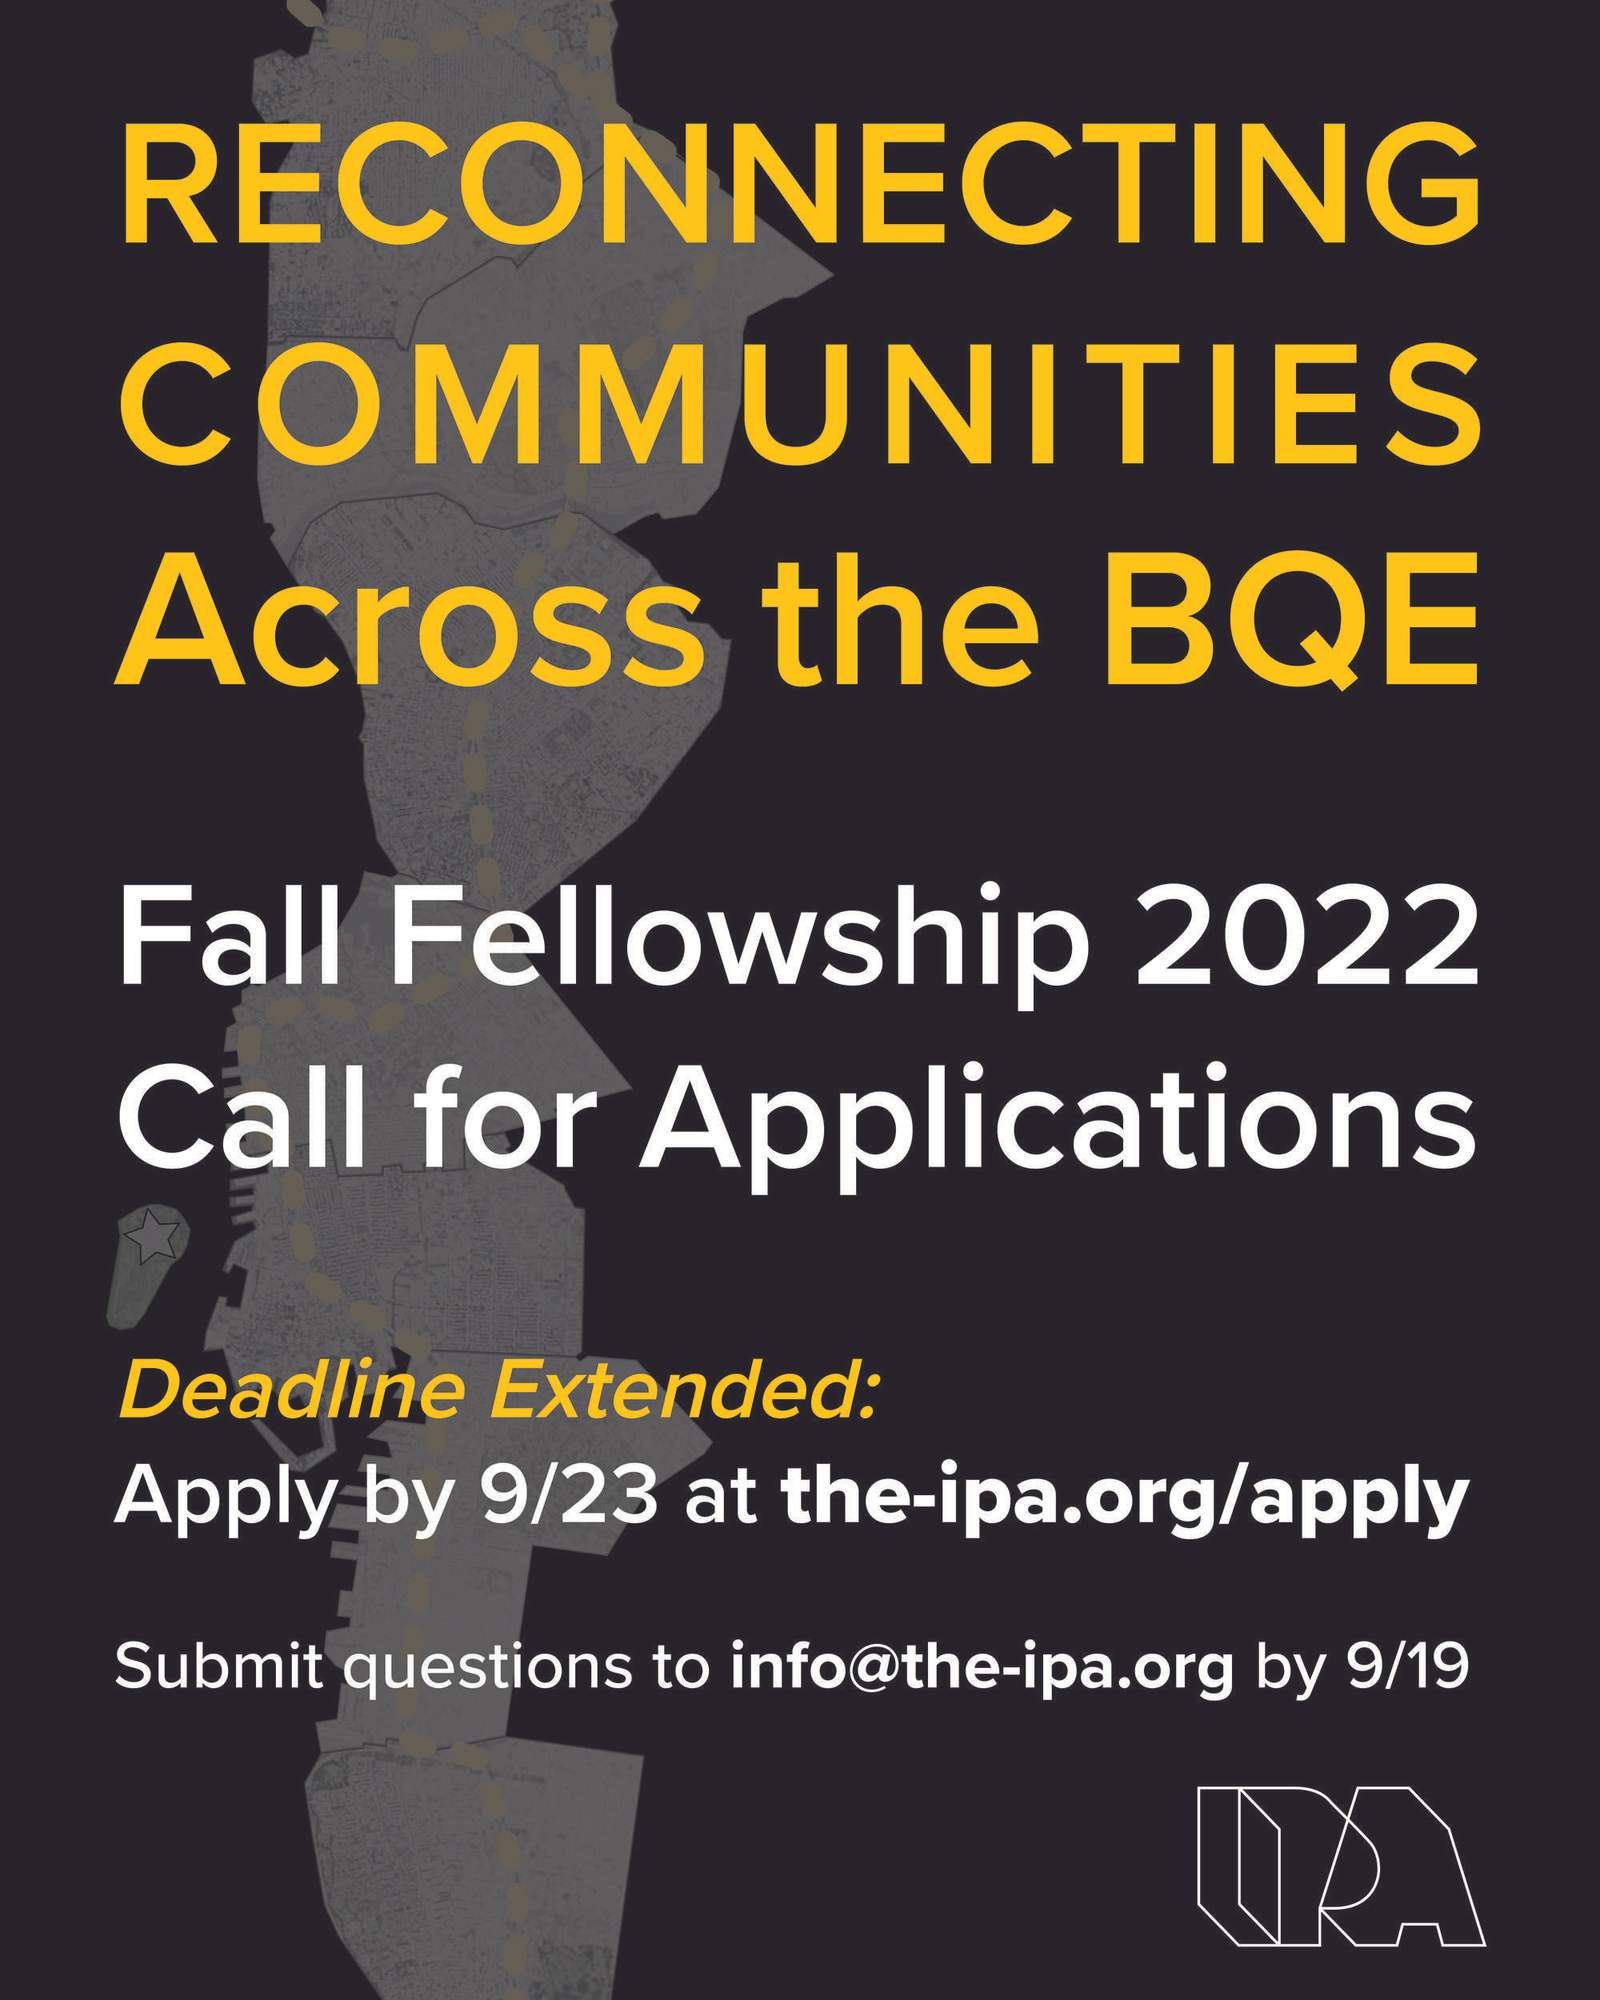 2022 Fall Fellowship: Reconnecting Communities across the BQE